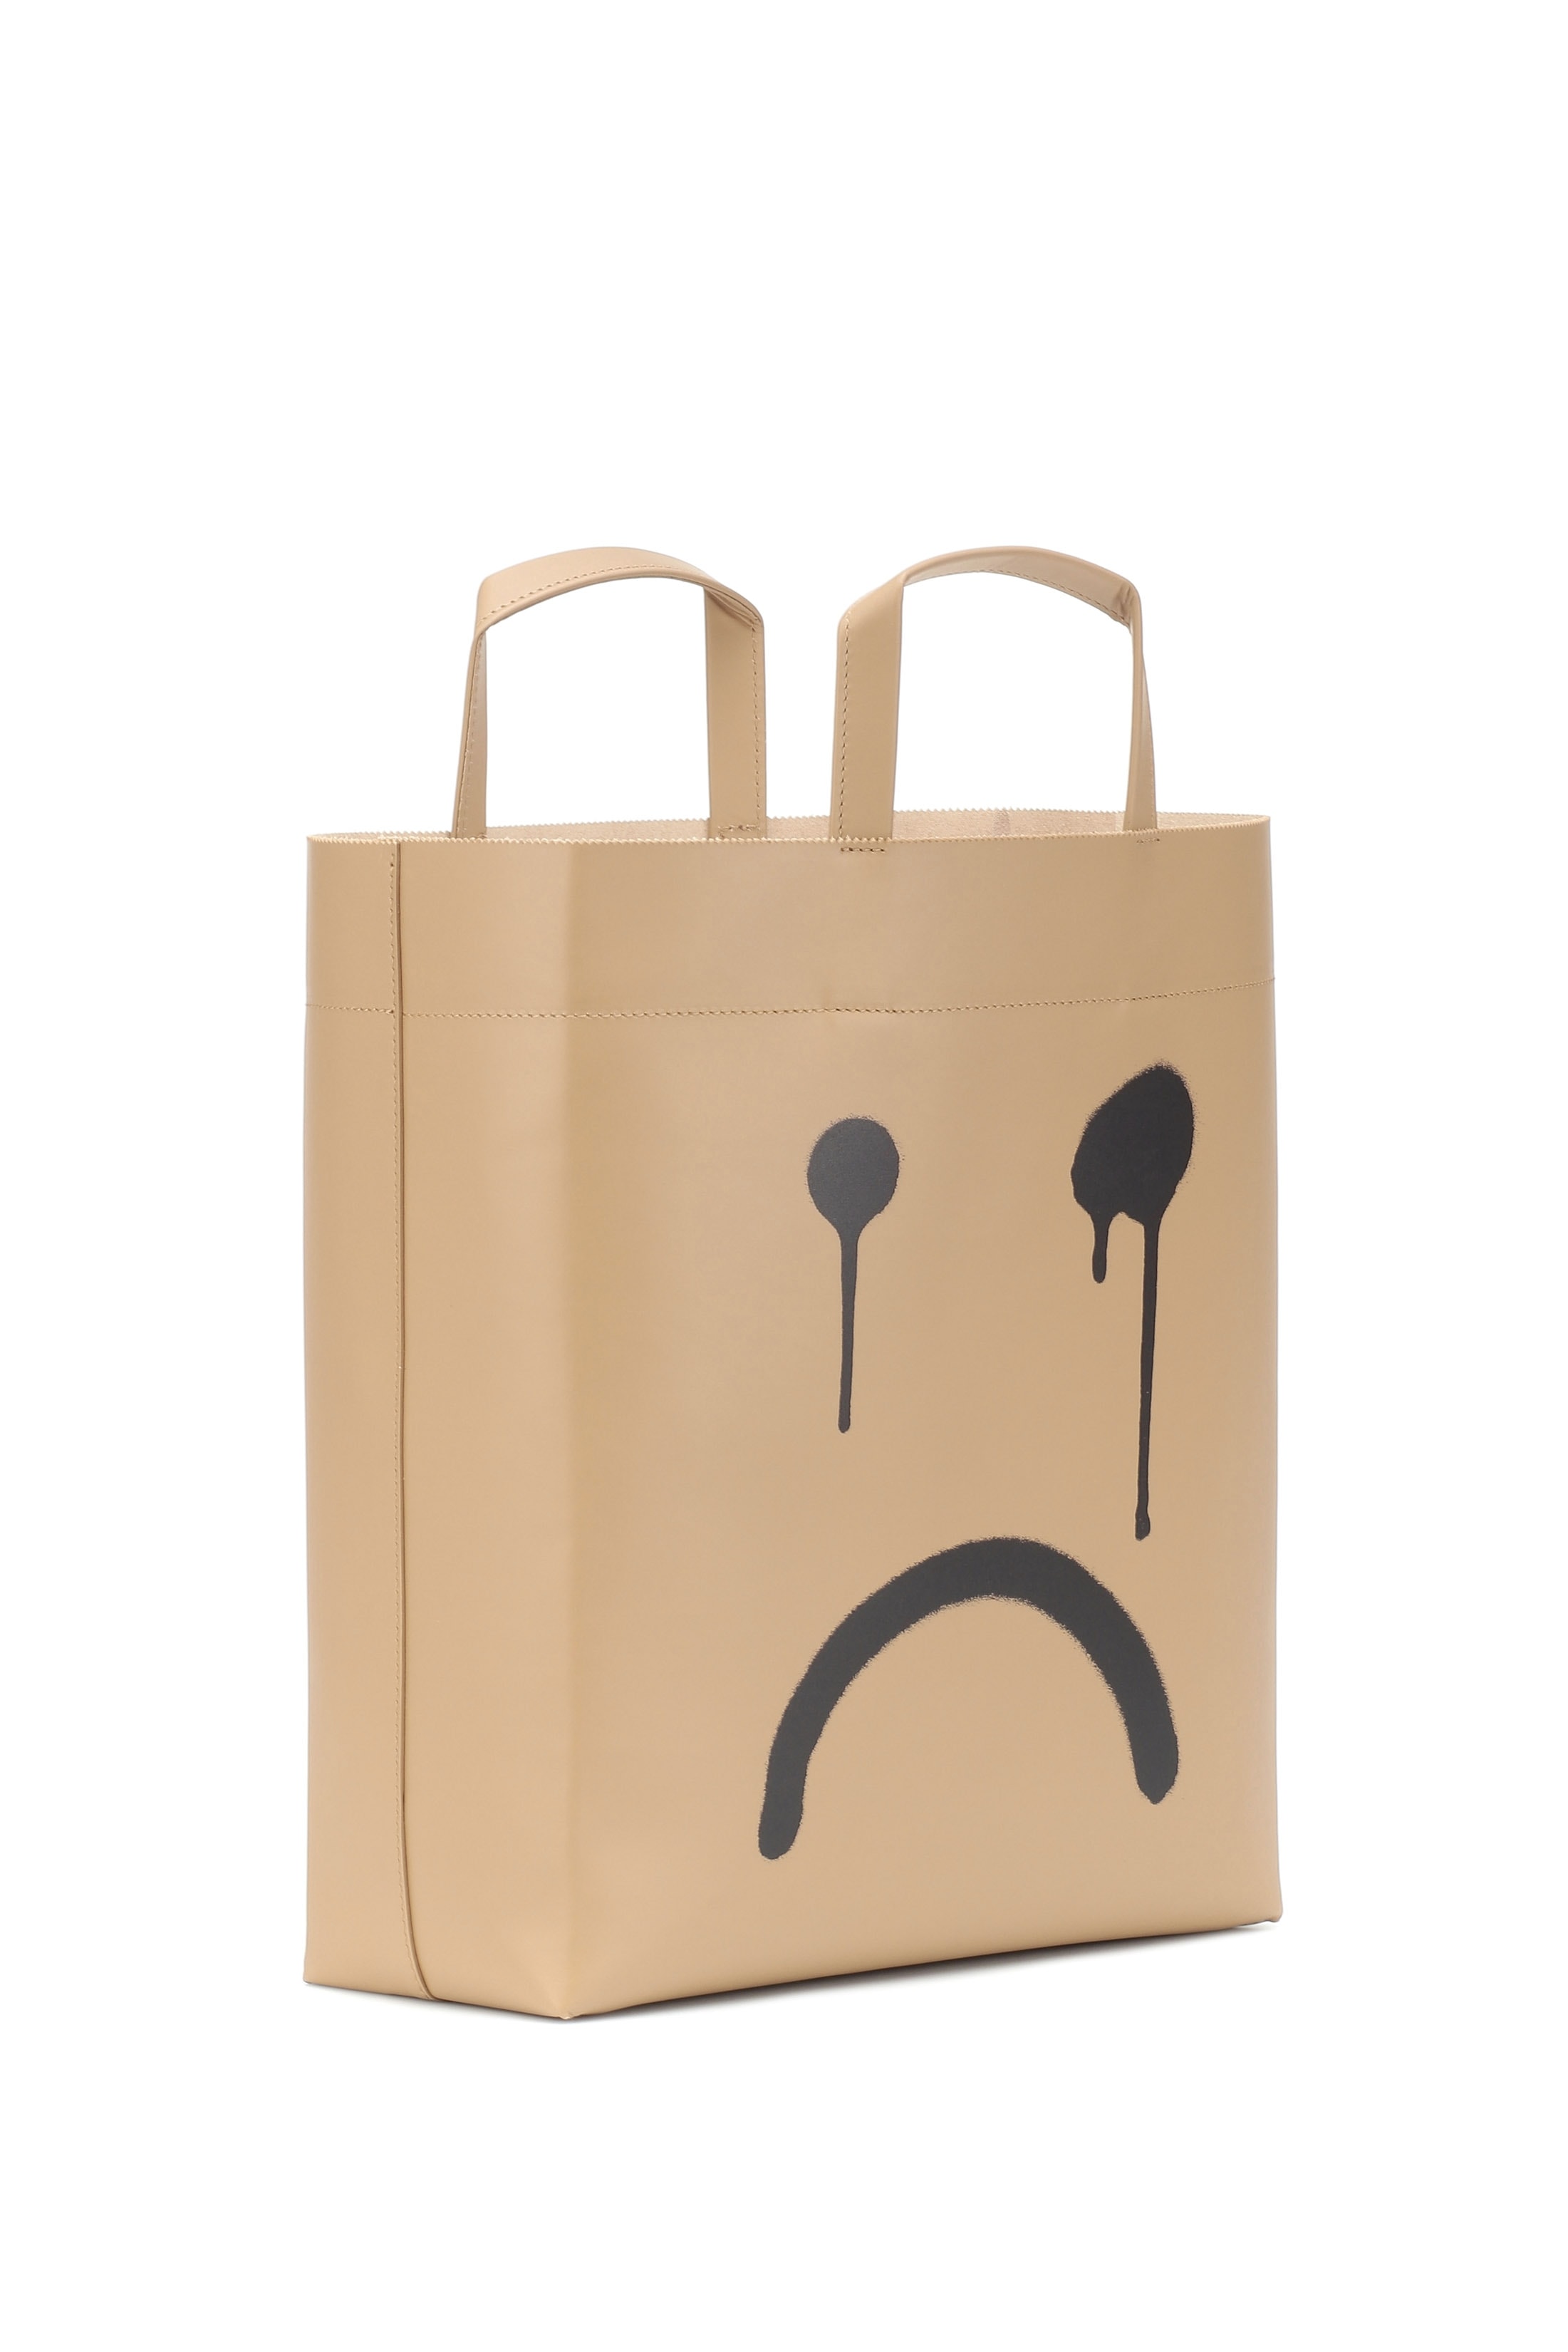 Balenciaga Happy Sad Smiley Face Paper Bag Fall/Winter 2019 Collection Design Graffiti Demna Gvasalia Accessory Luxury 